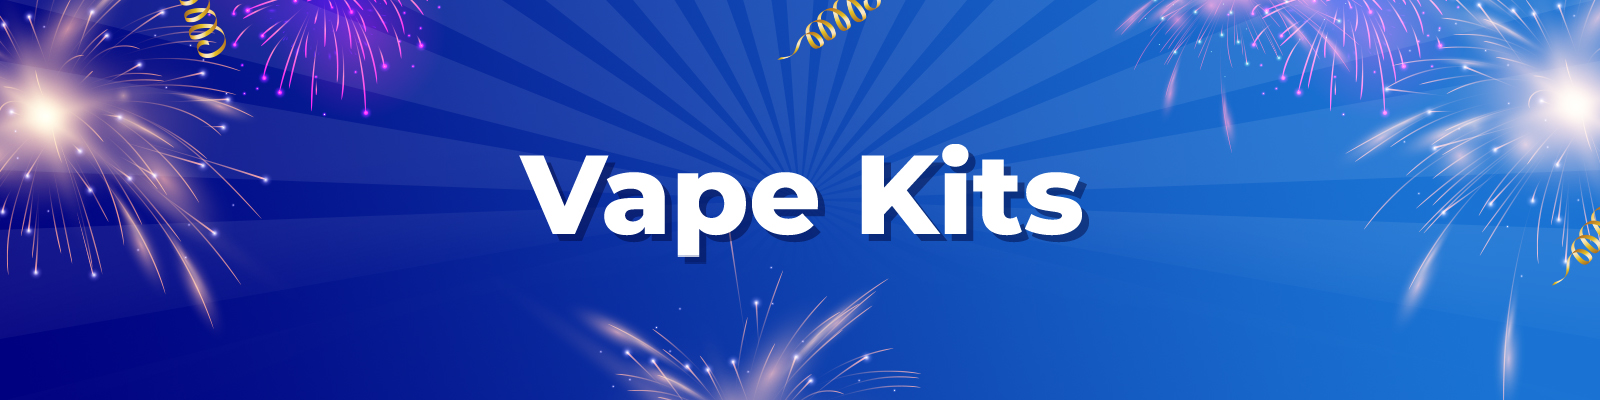 Vape Kit Deals